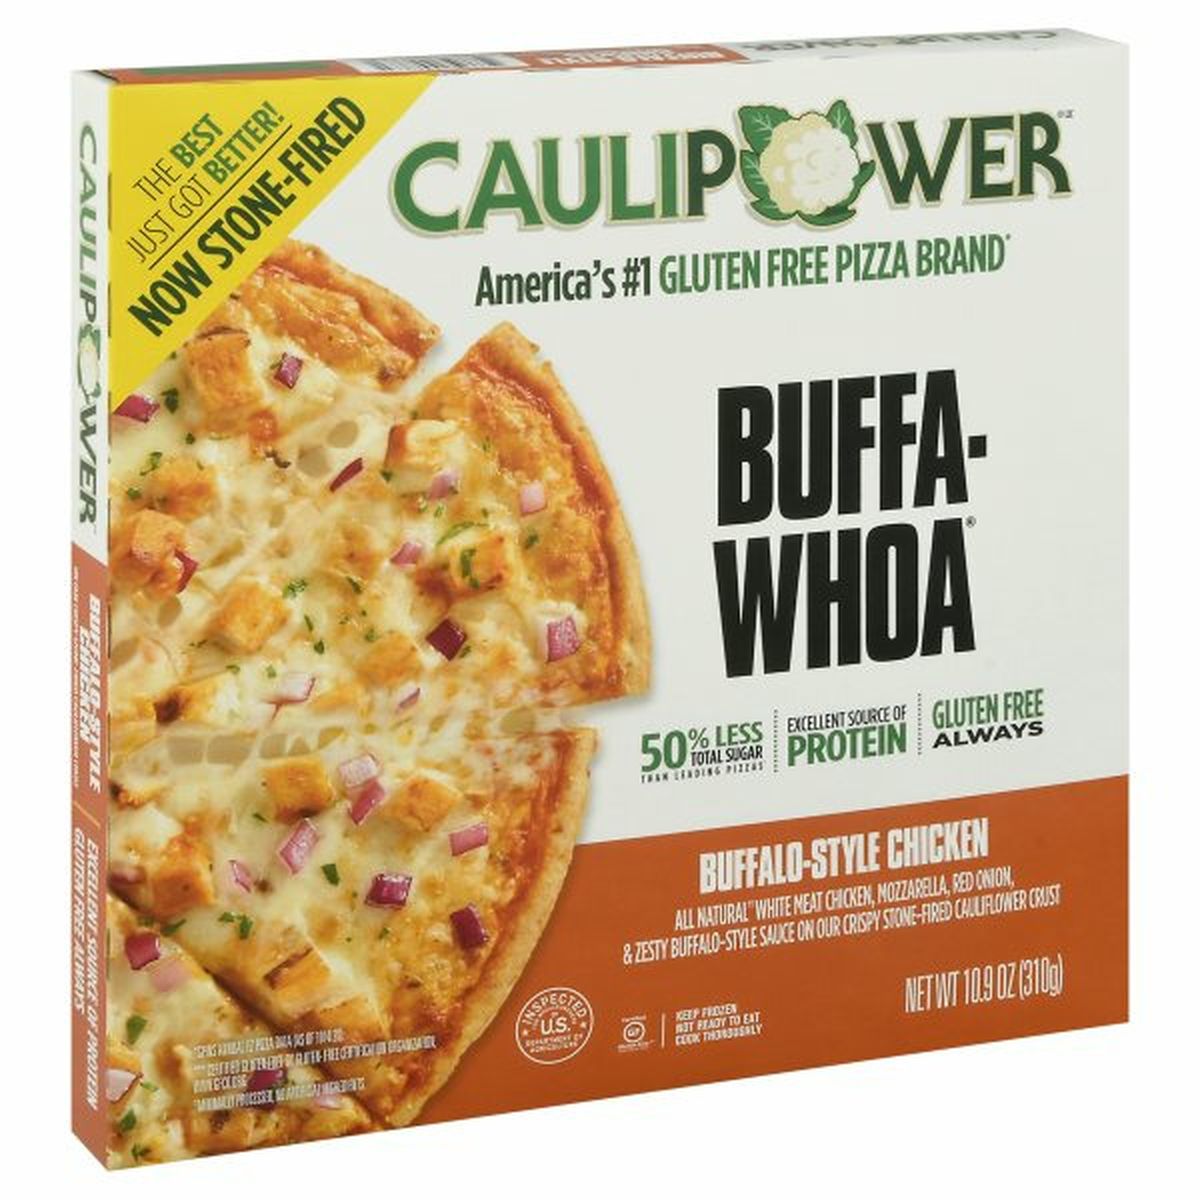 Calories in Caulipower Chicken Pizza, Buffa-Whoa